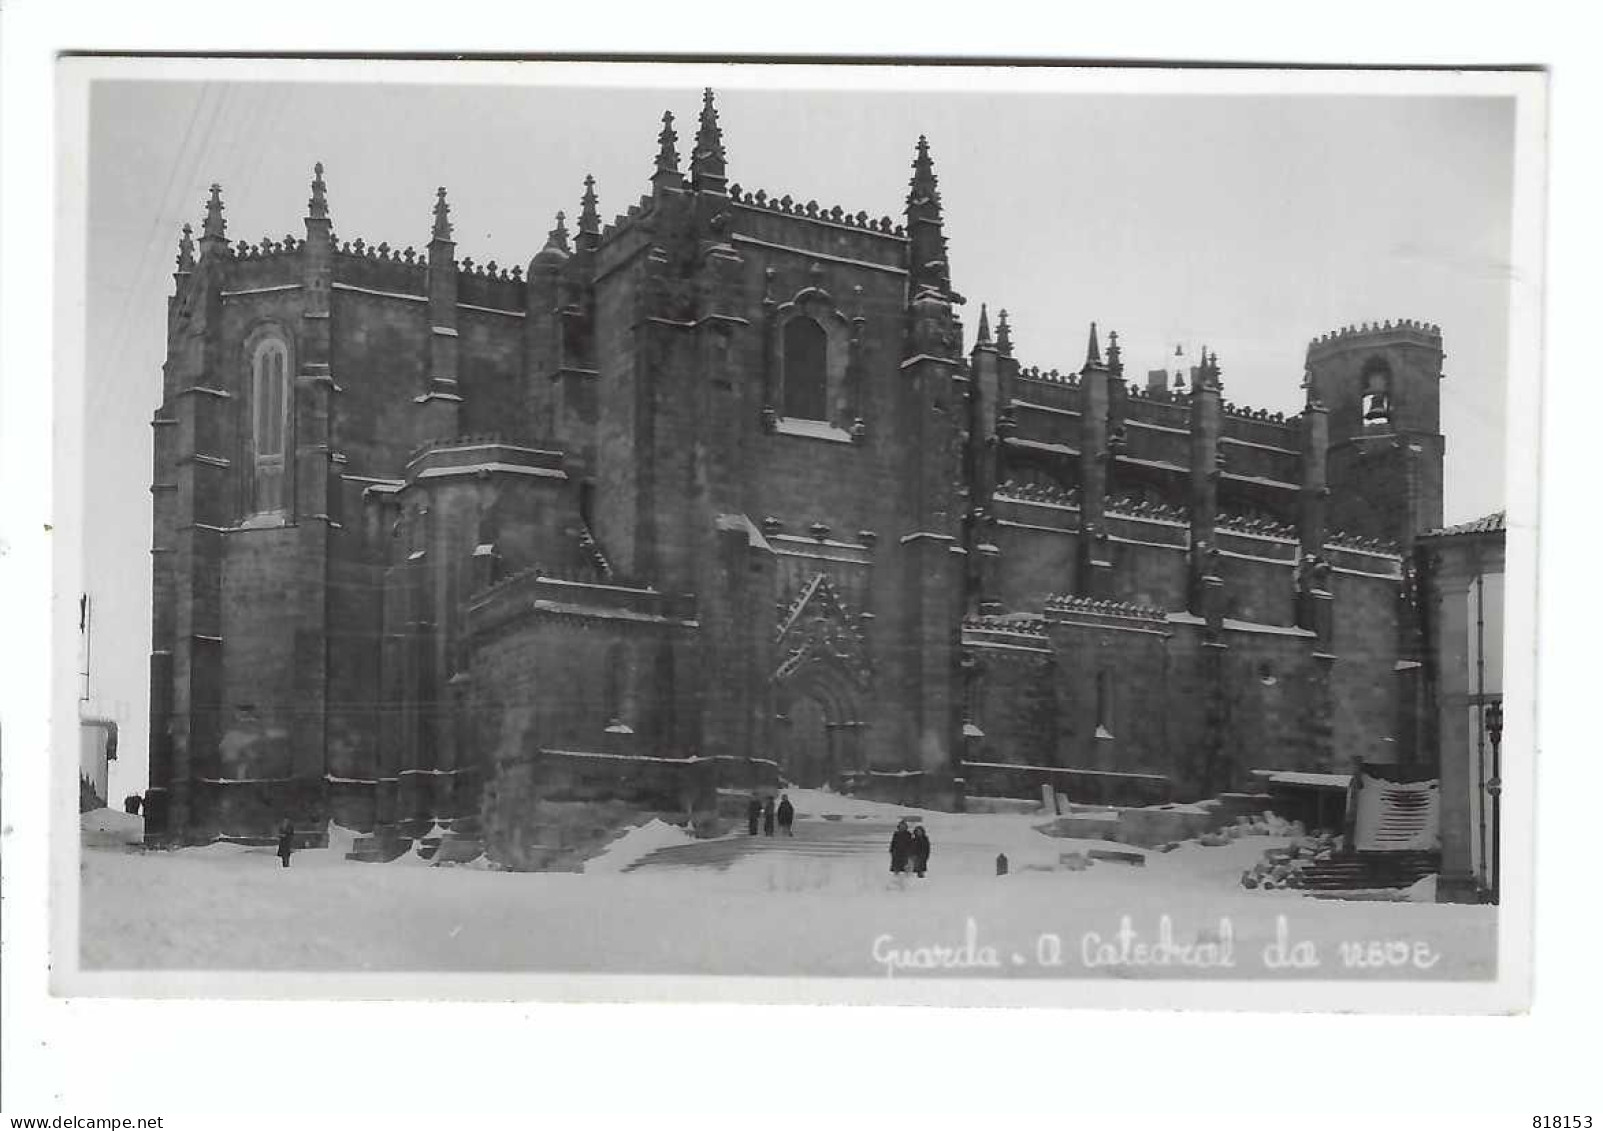 Guarda    A Cathedral Da Neve   FOTO HERMINIOS - Guarda